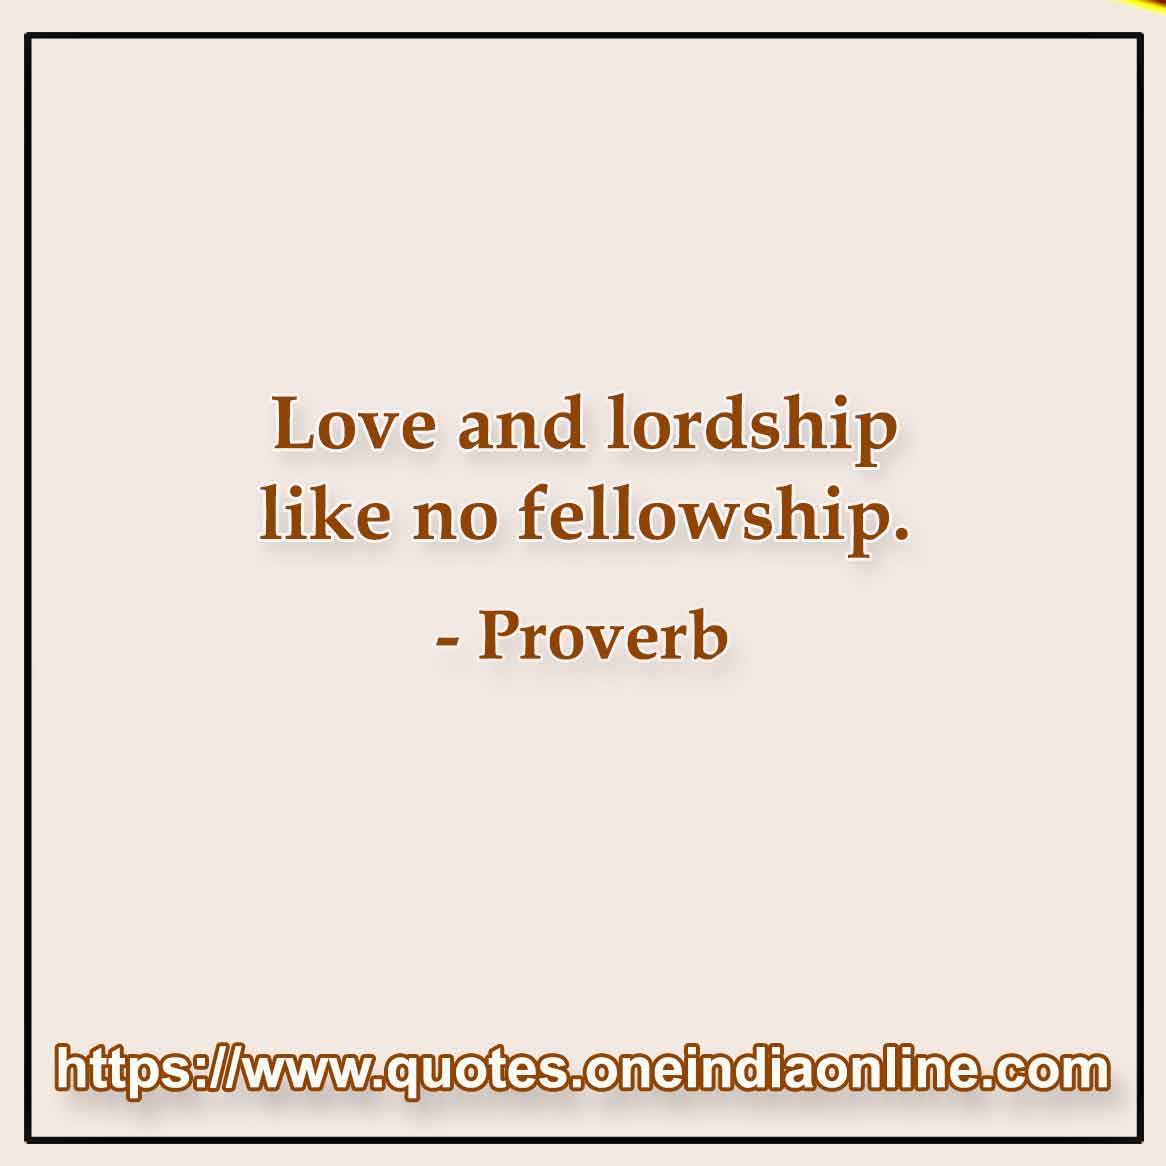 Love and lordship like no fellowship.

